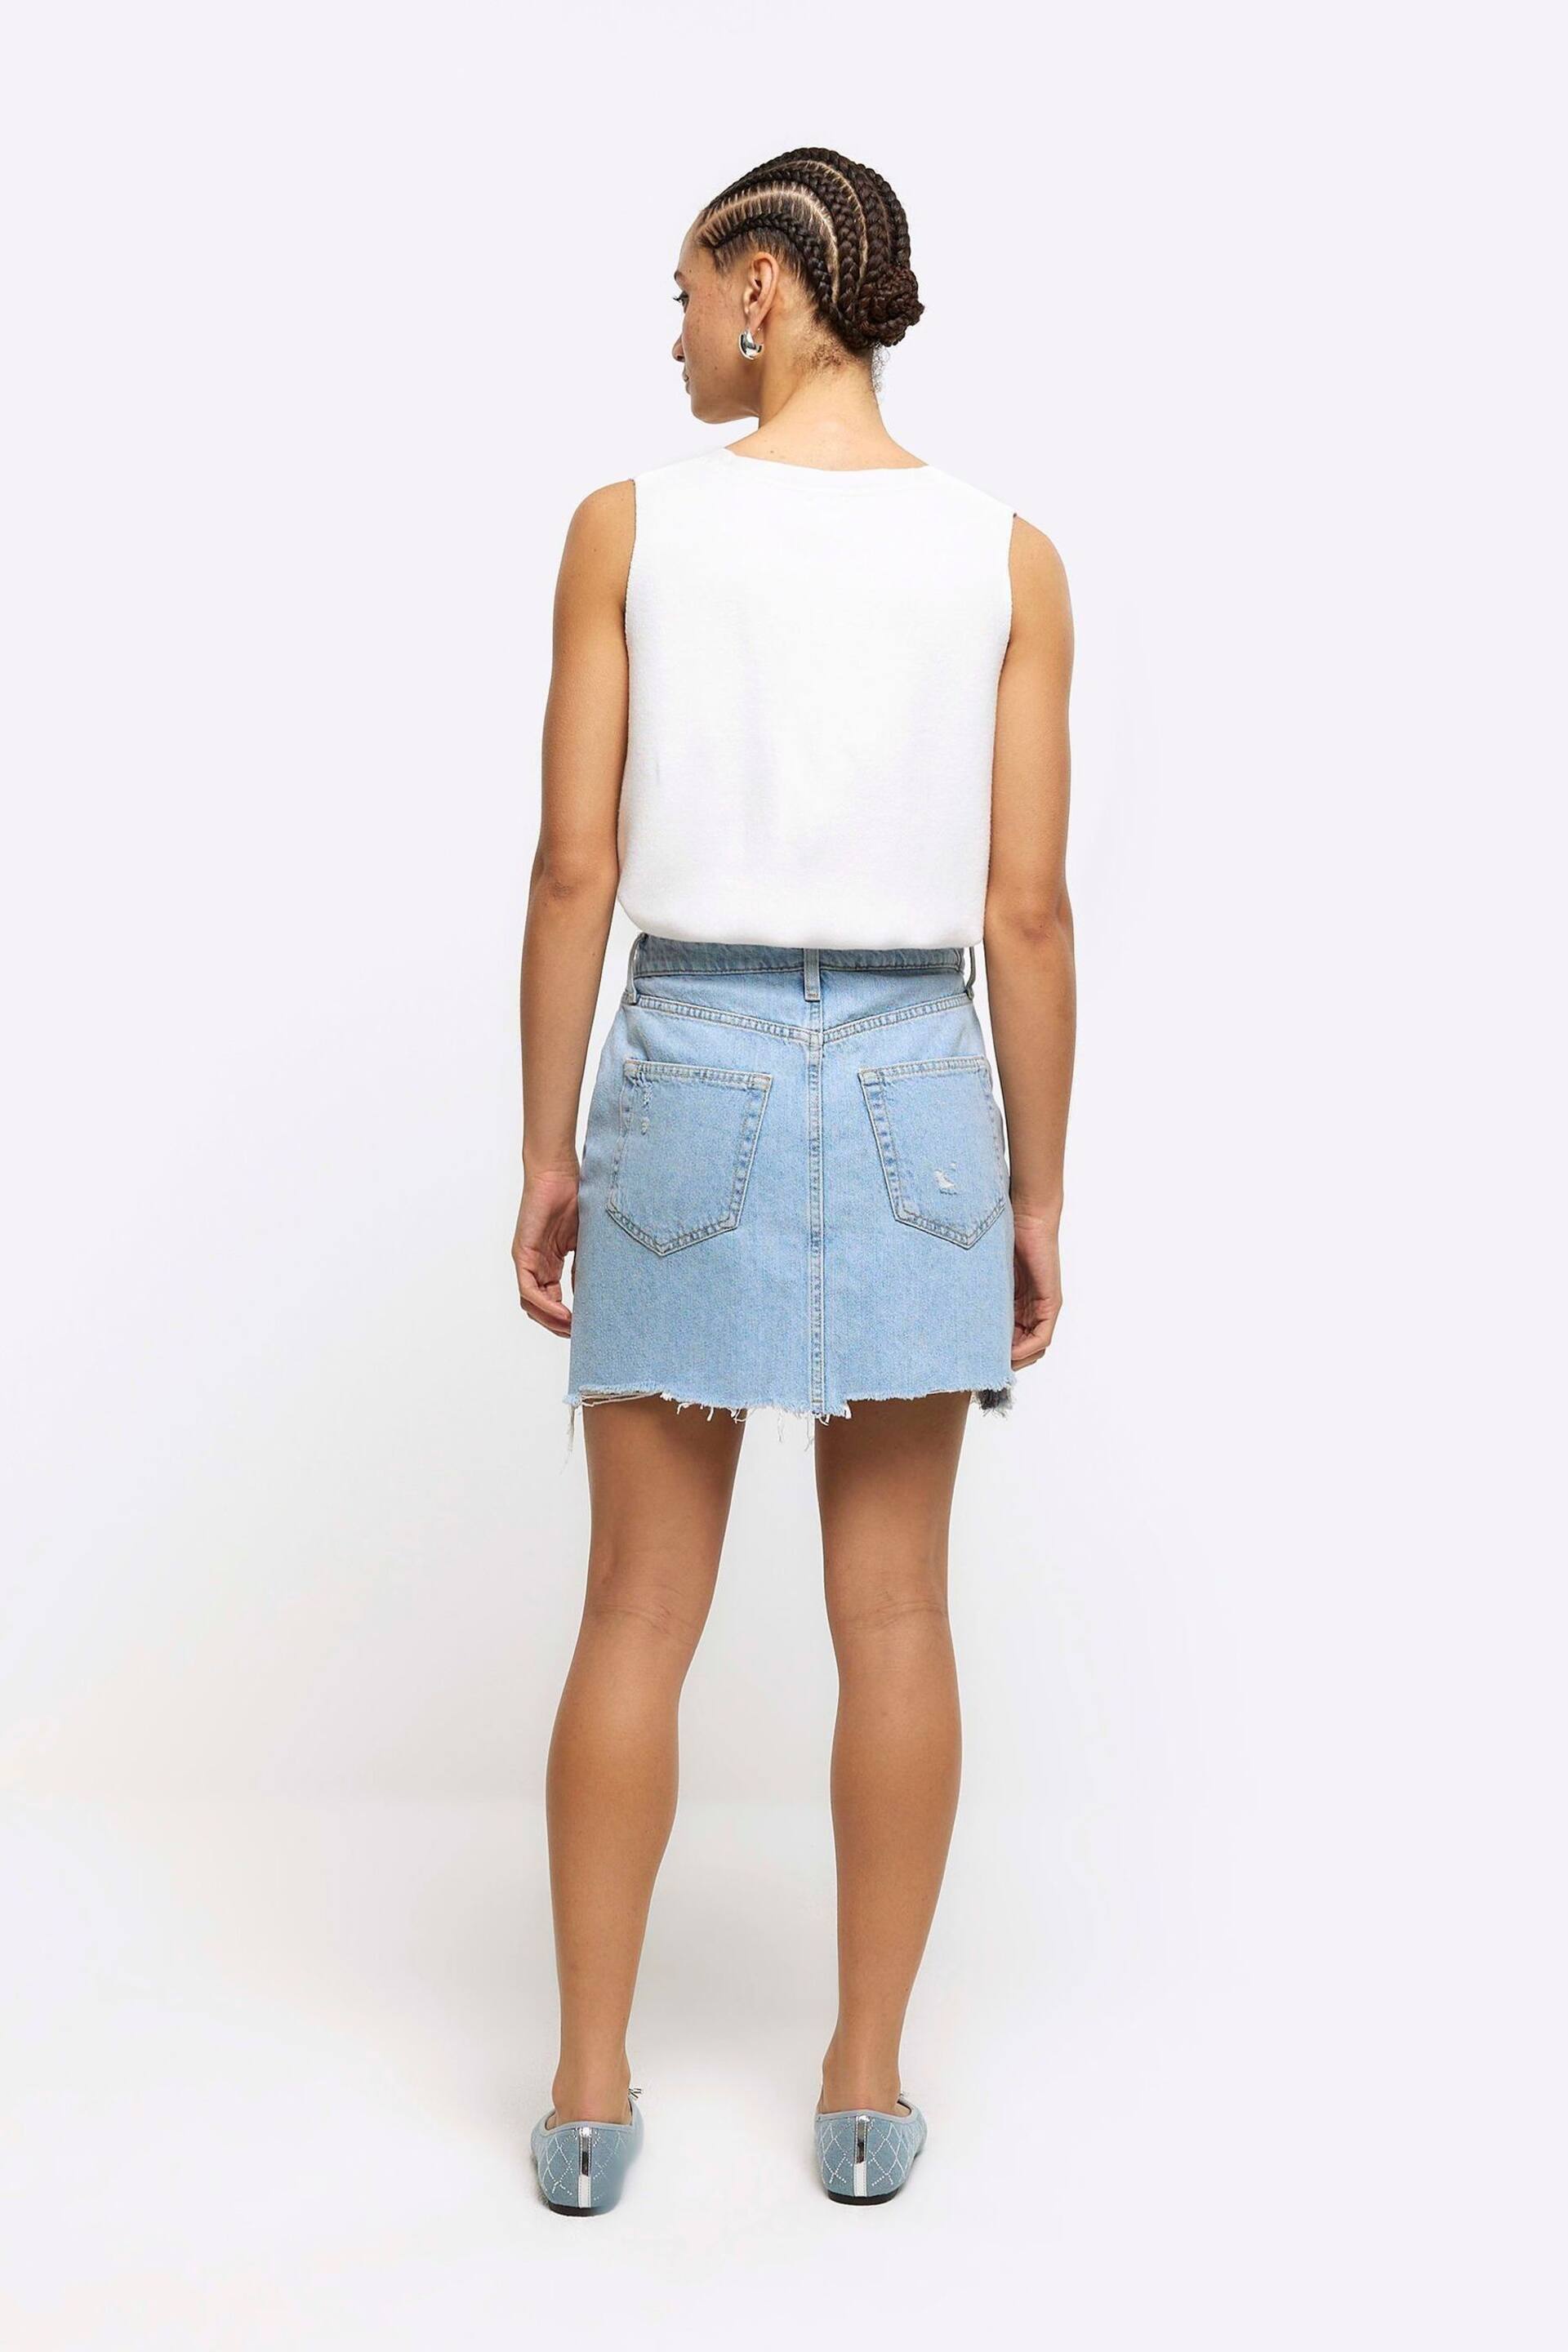 River Island Blue Aysm Waist Denim Mini Skirt - Image 3 of 4